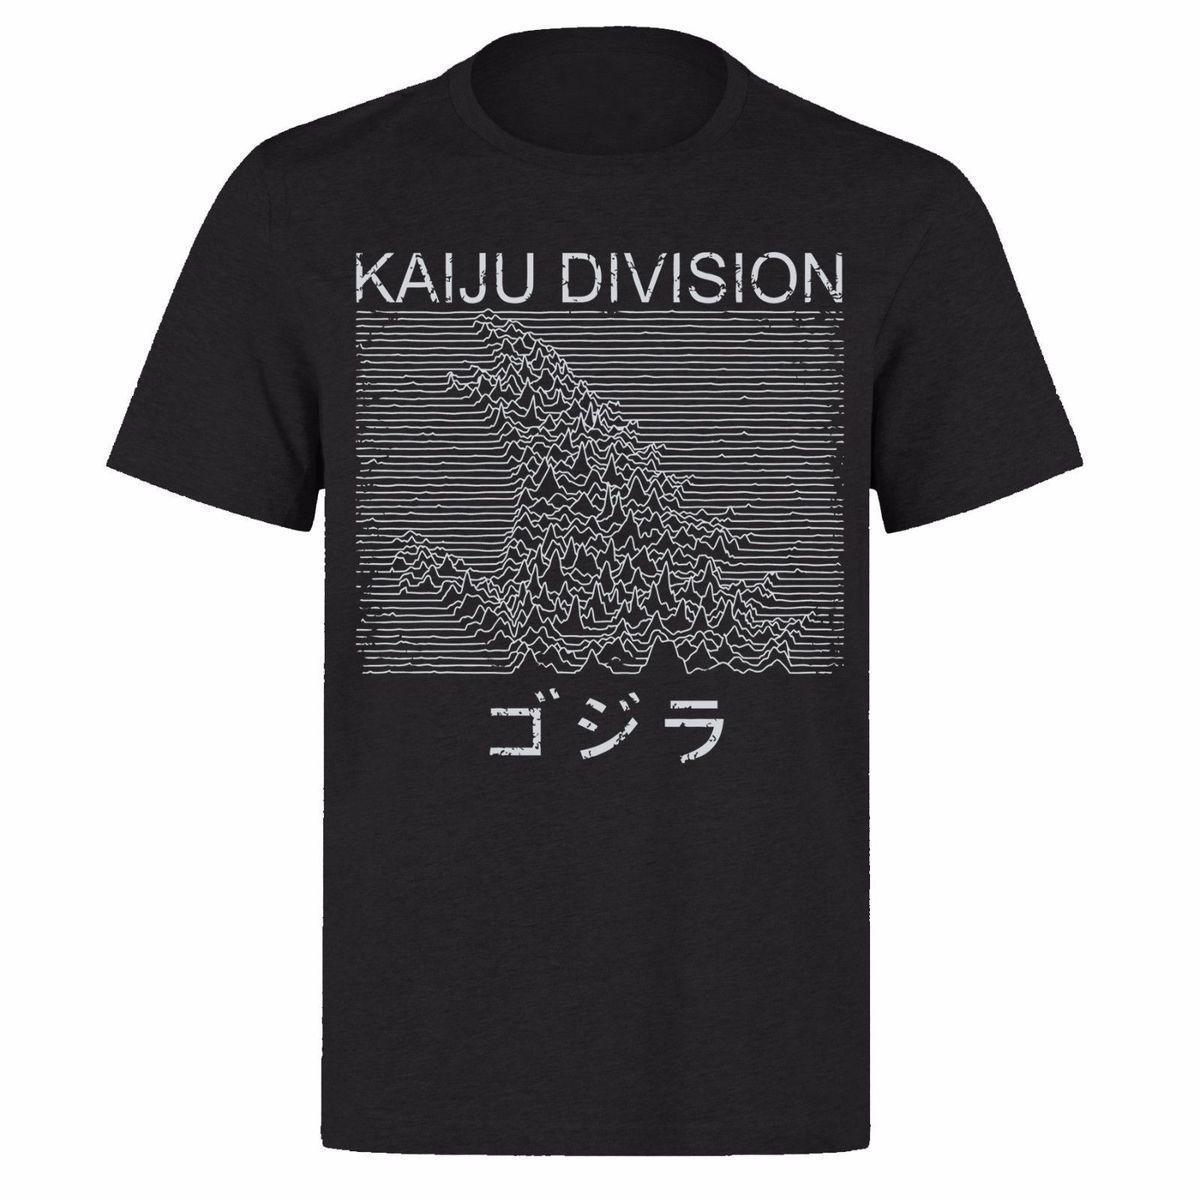 Godzilla T-Shirt Kaiju Joy Division Unknown Pleasures Parody Mens Funny Dinosaur